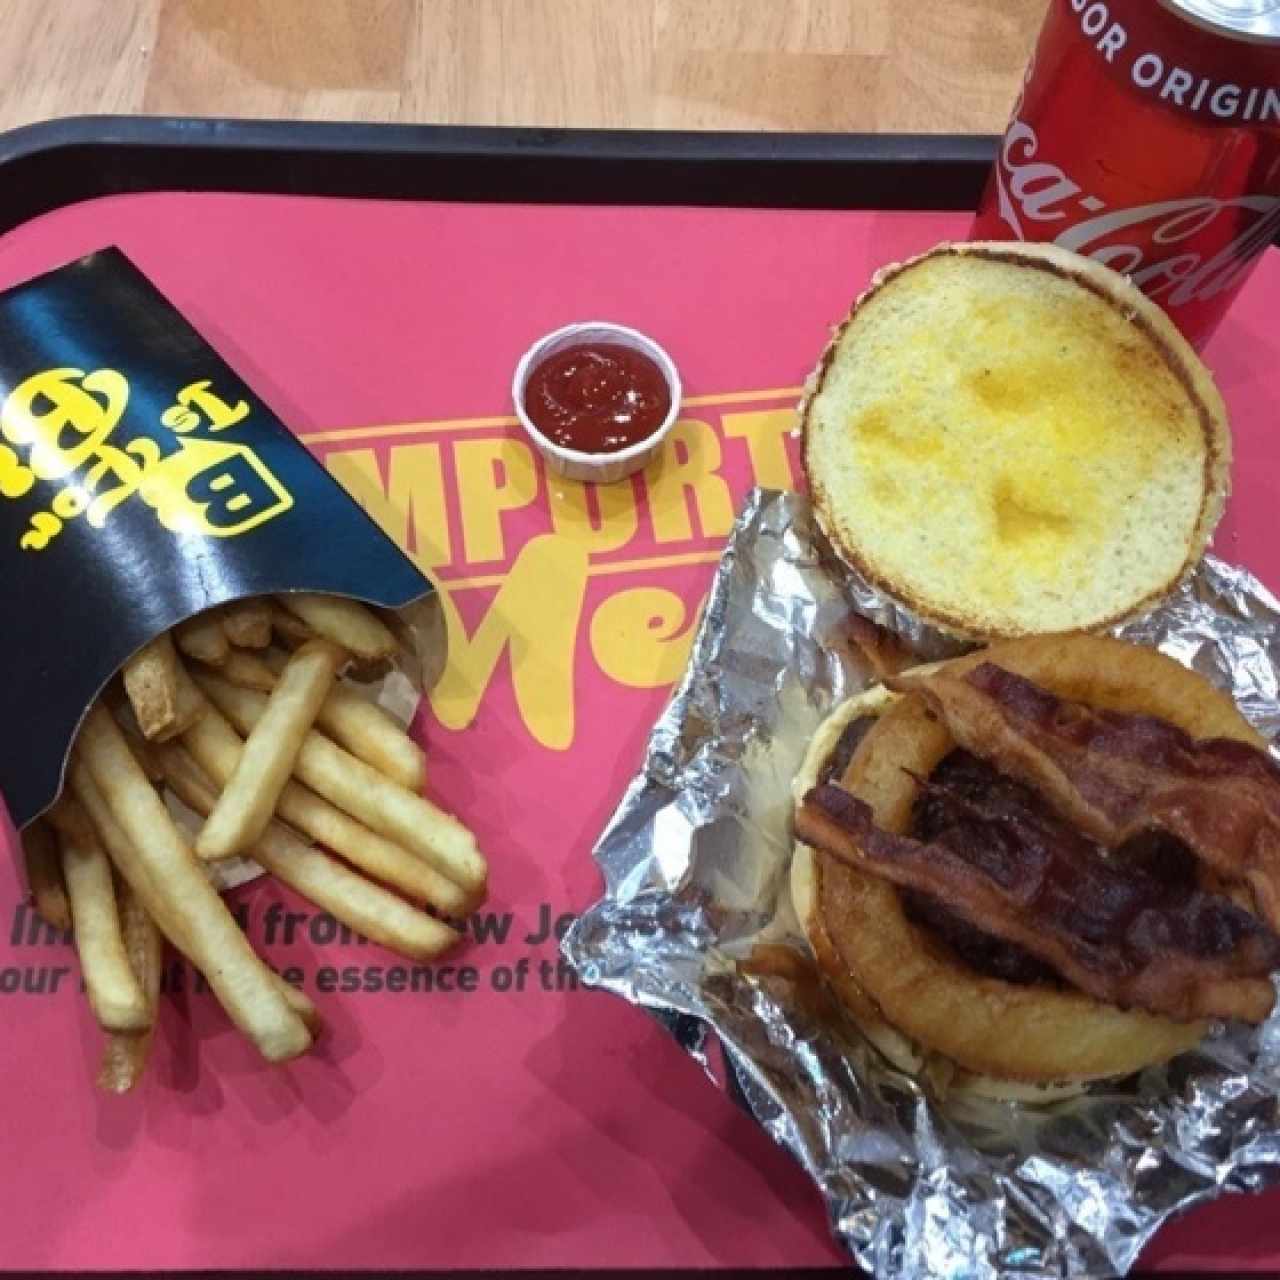 Real Burgers - Beastie Bacon Burger